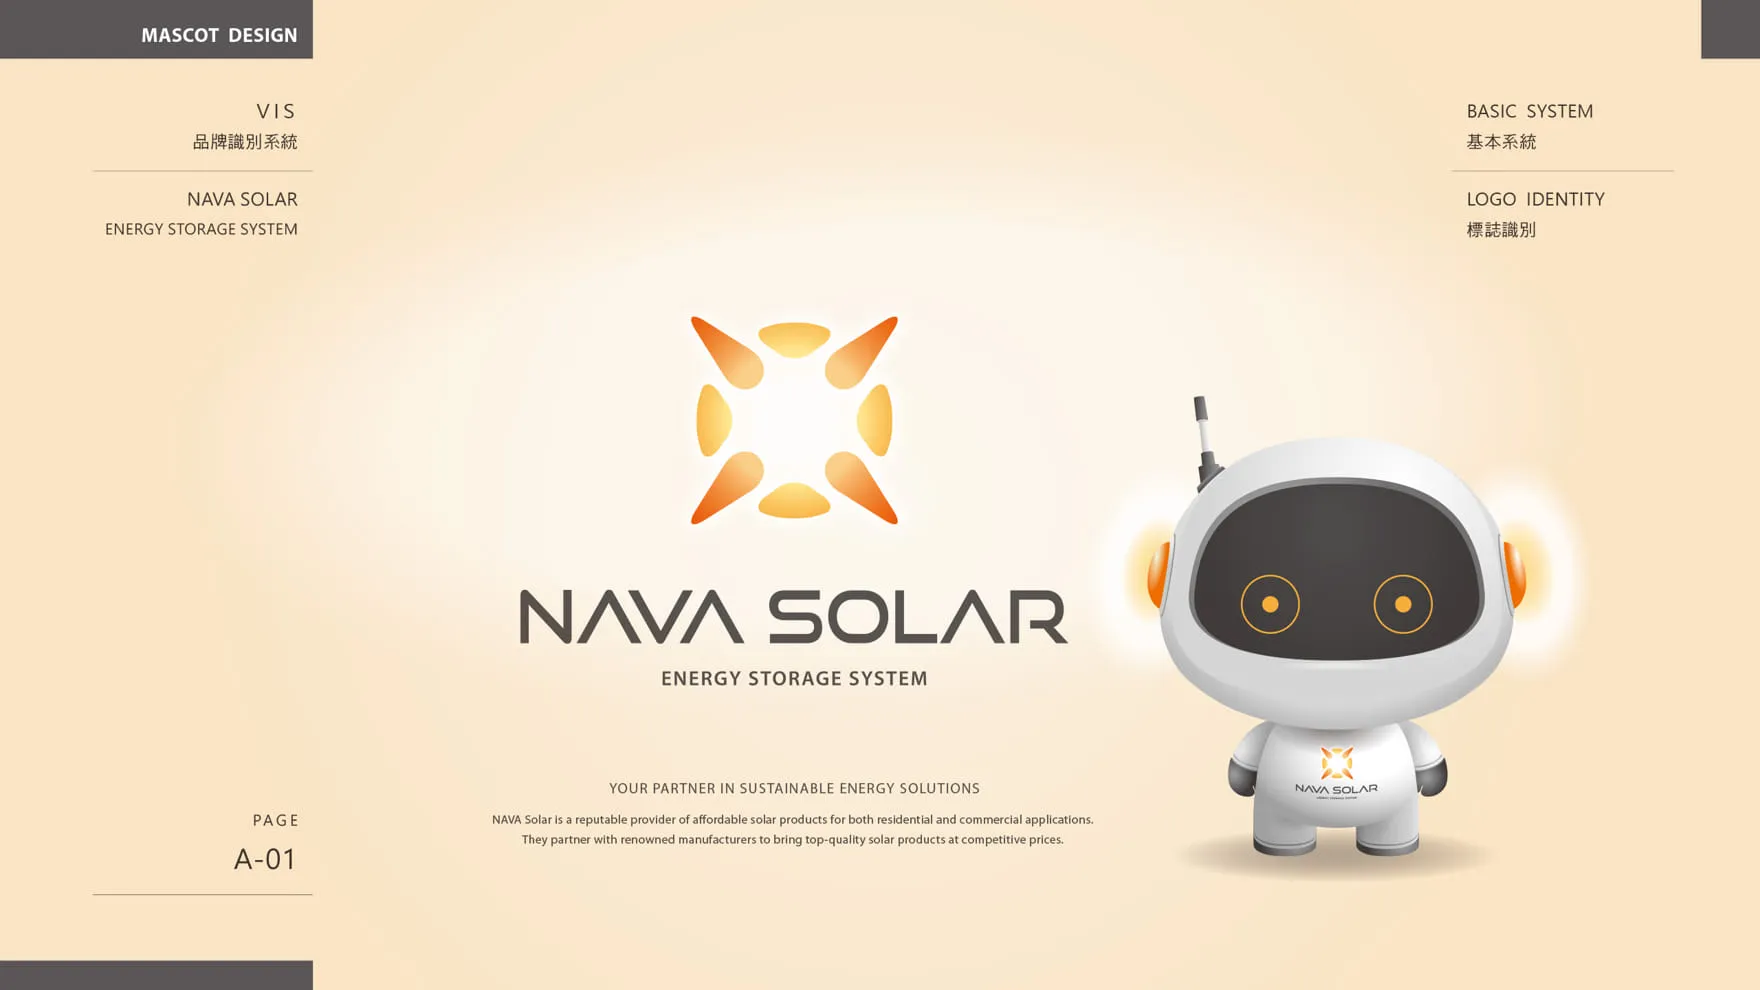 NAVA SOLAR 太陽能光電存儲LOGO品牌吉祥物設計規範 Mascot design